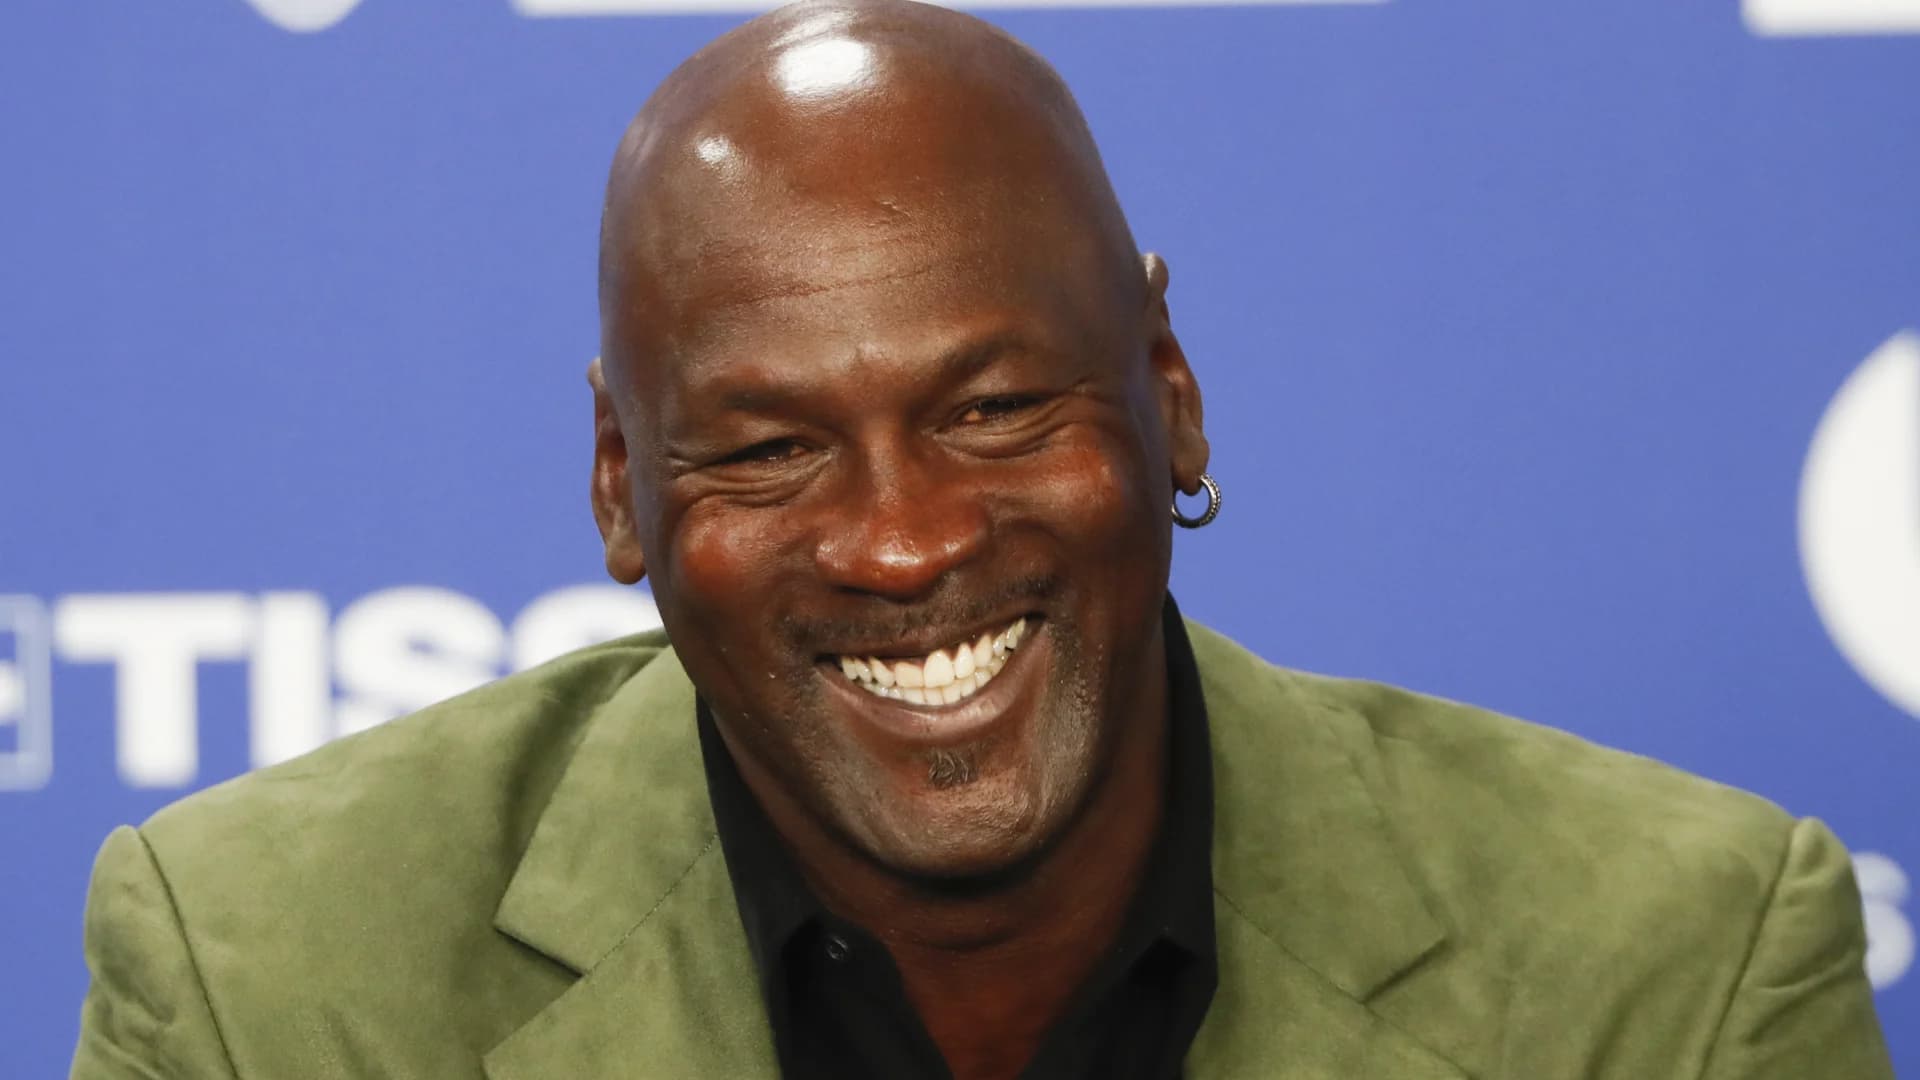 Michael Jordan donates $10M to Make-A-Wish for 60th birthday